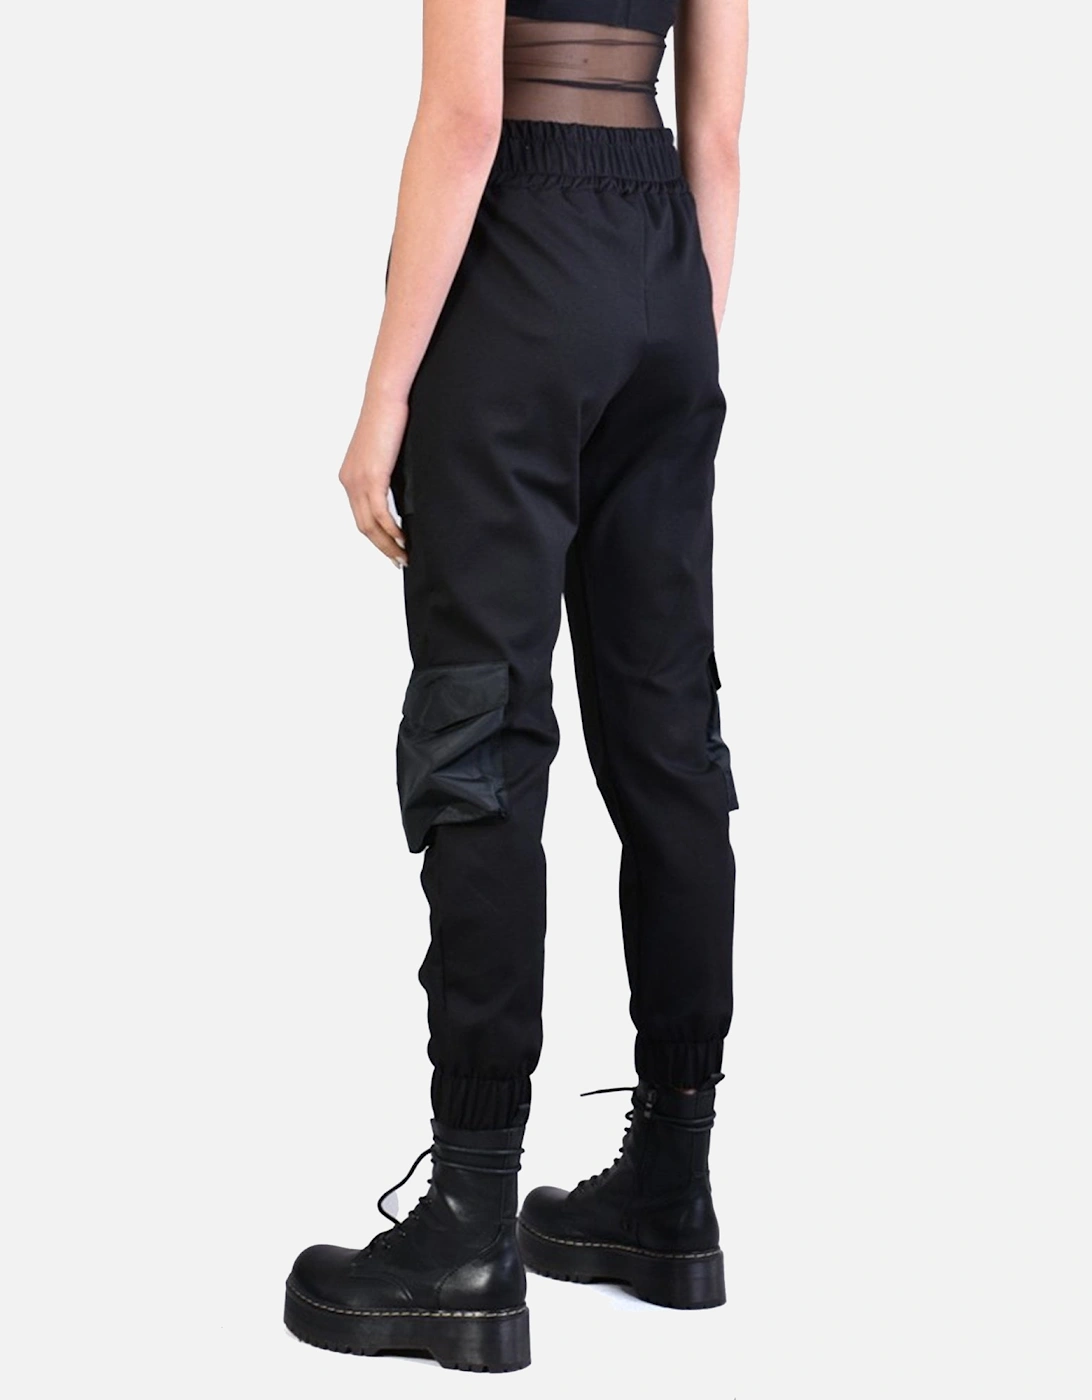 Contrast Fabric Cargo Black Sweatpants